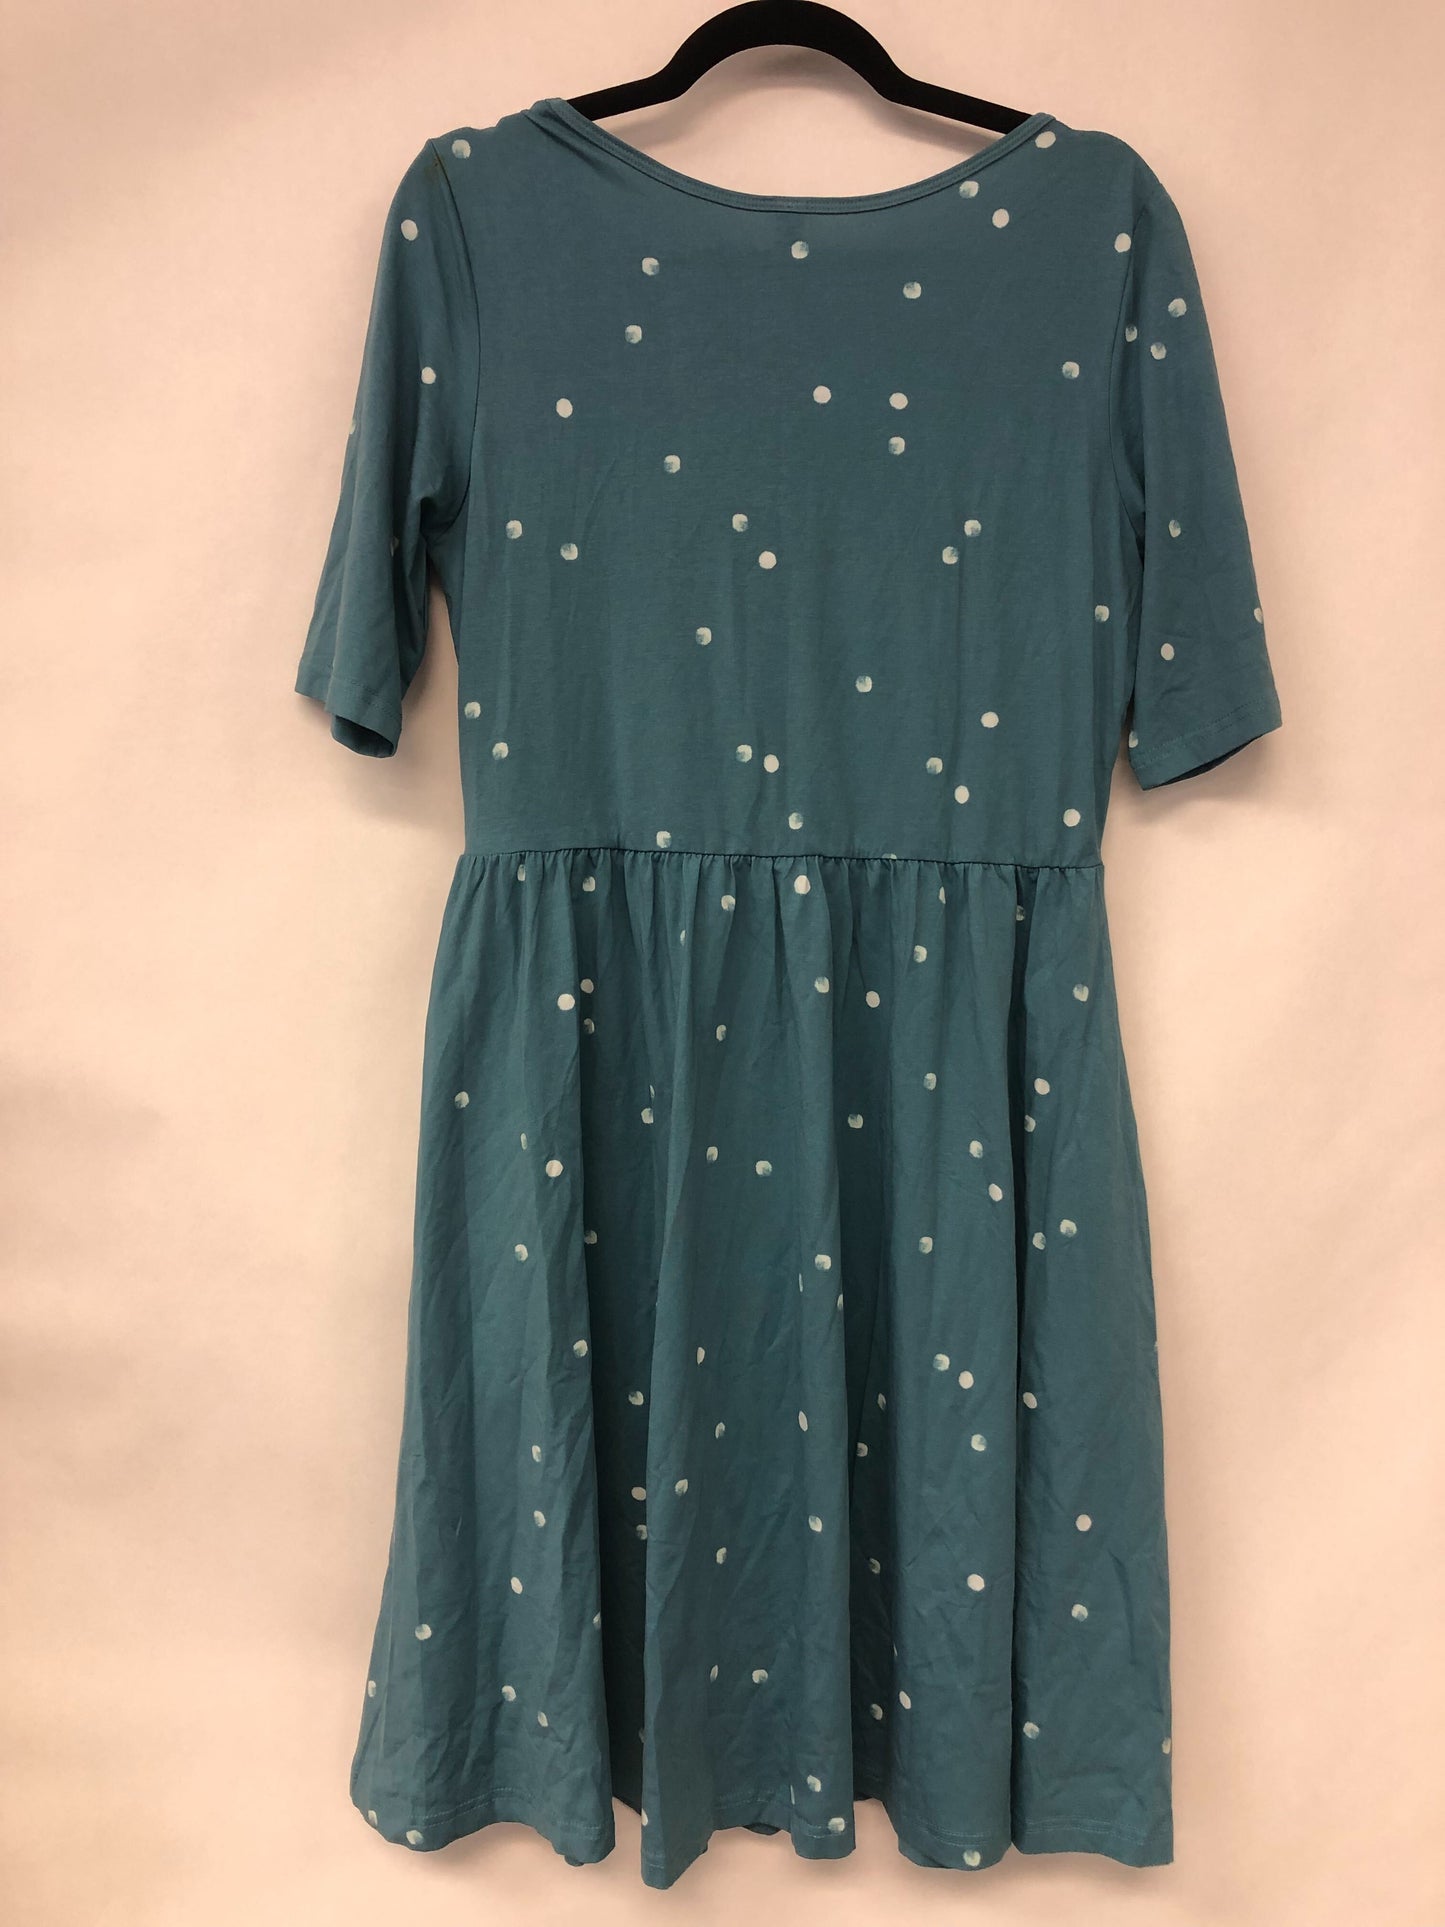 Outlet 6144 - Latched Mama Simple Cotton Nursing Dress - Steel Blue Dots - Large